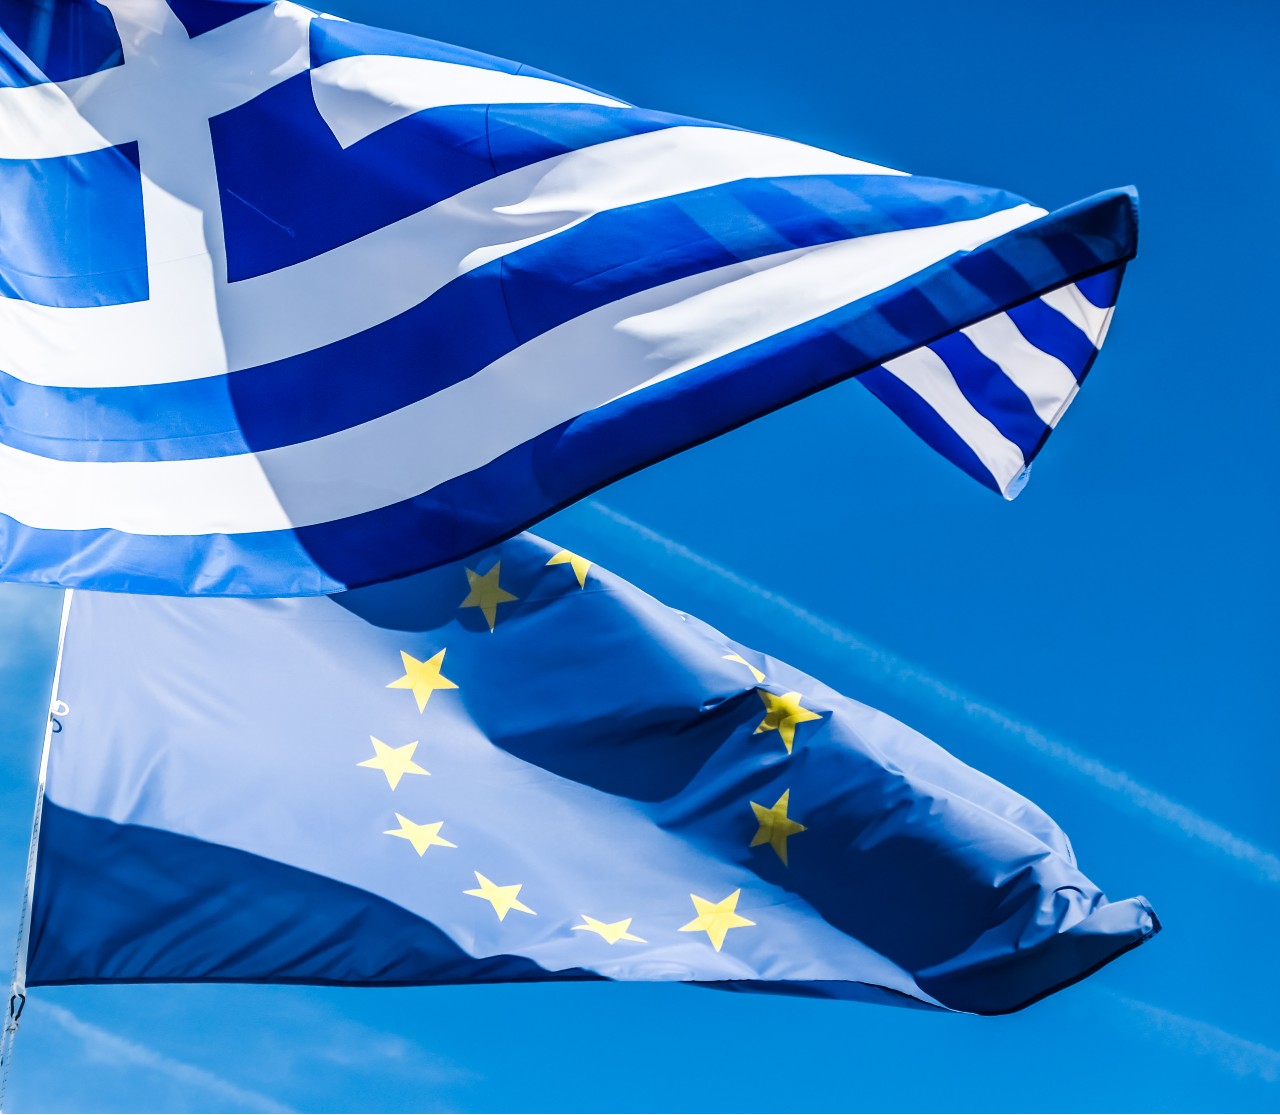 221118090038_flags-greece-european-union-blue-sky-background-politics-europe